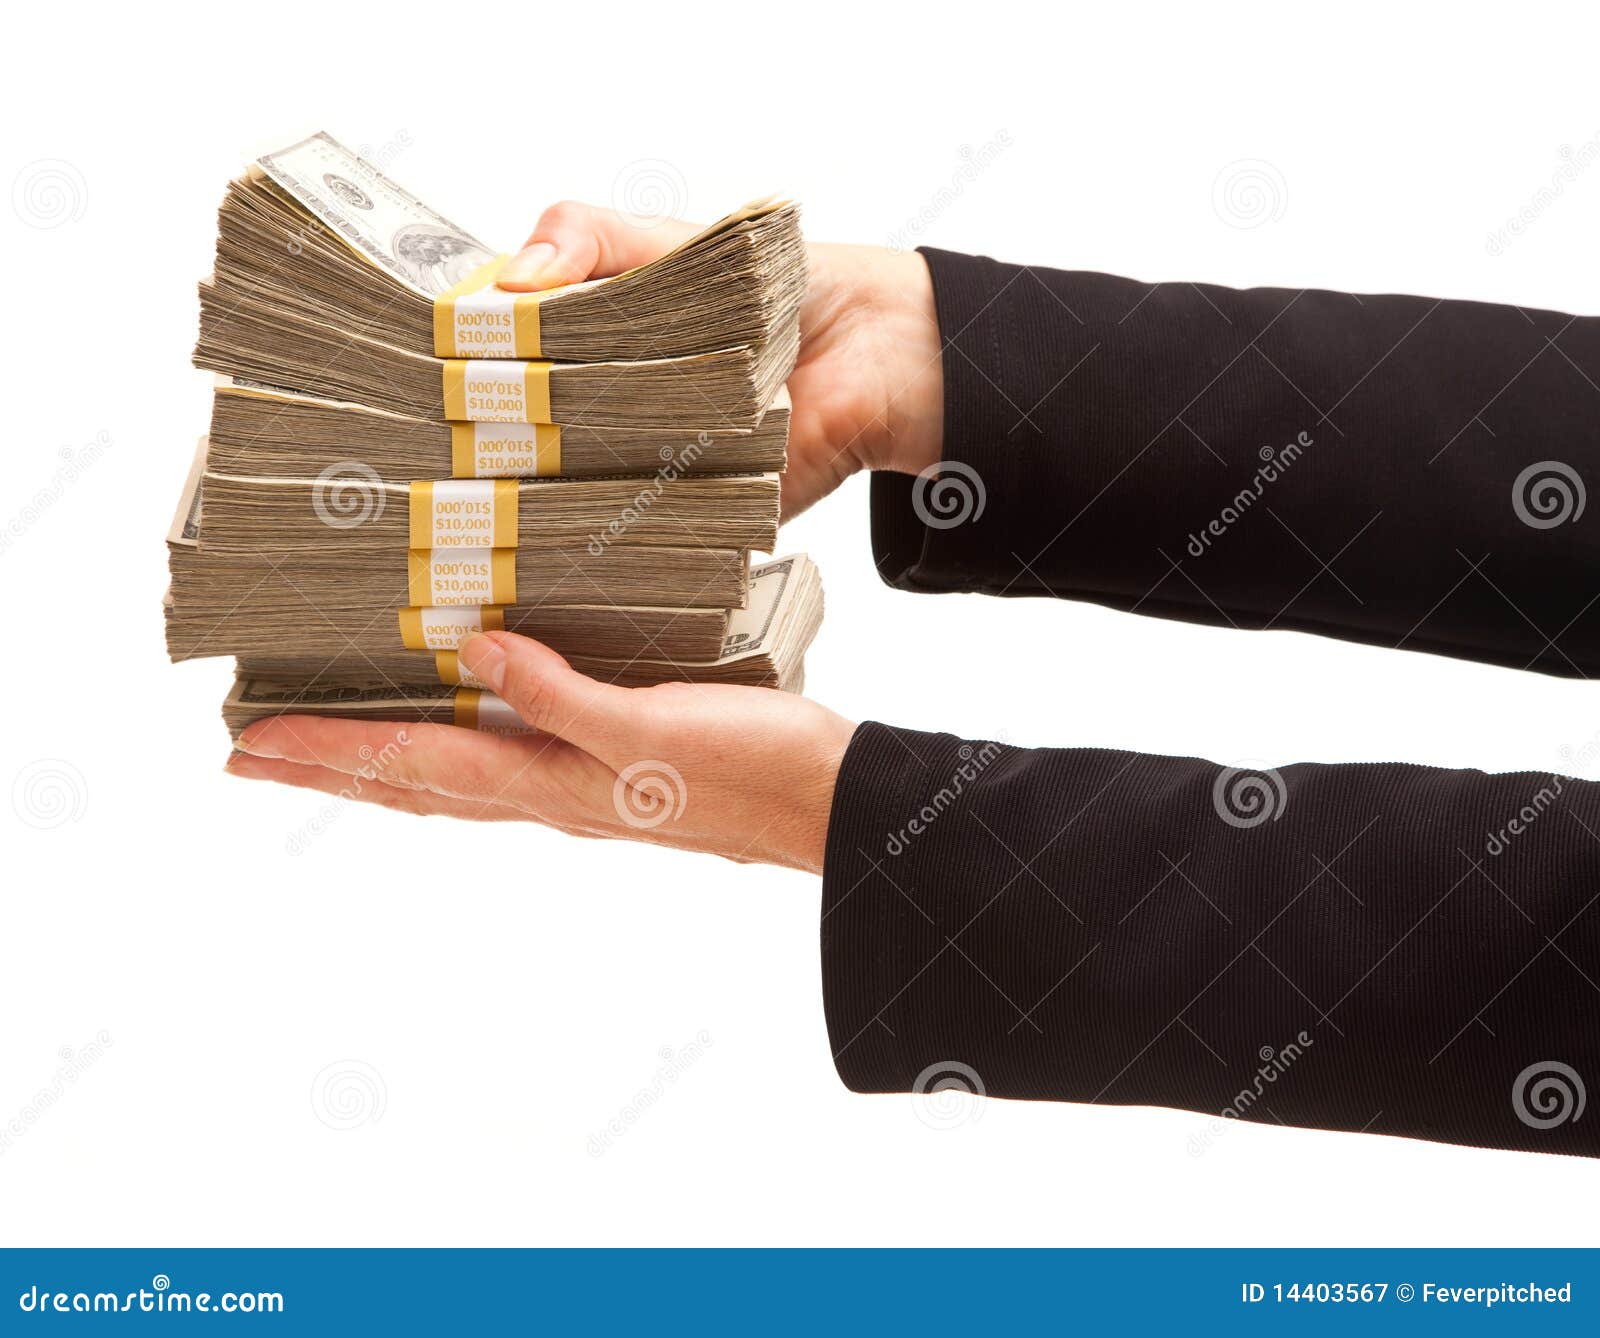 woman handing over hundreds of dollars